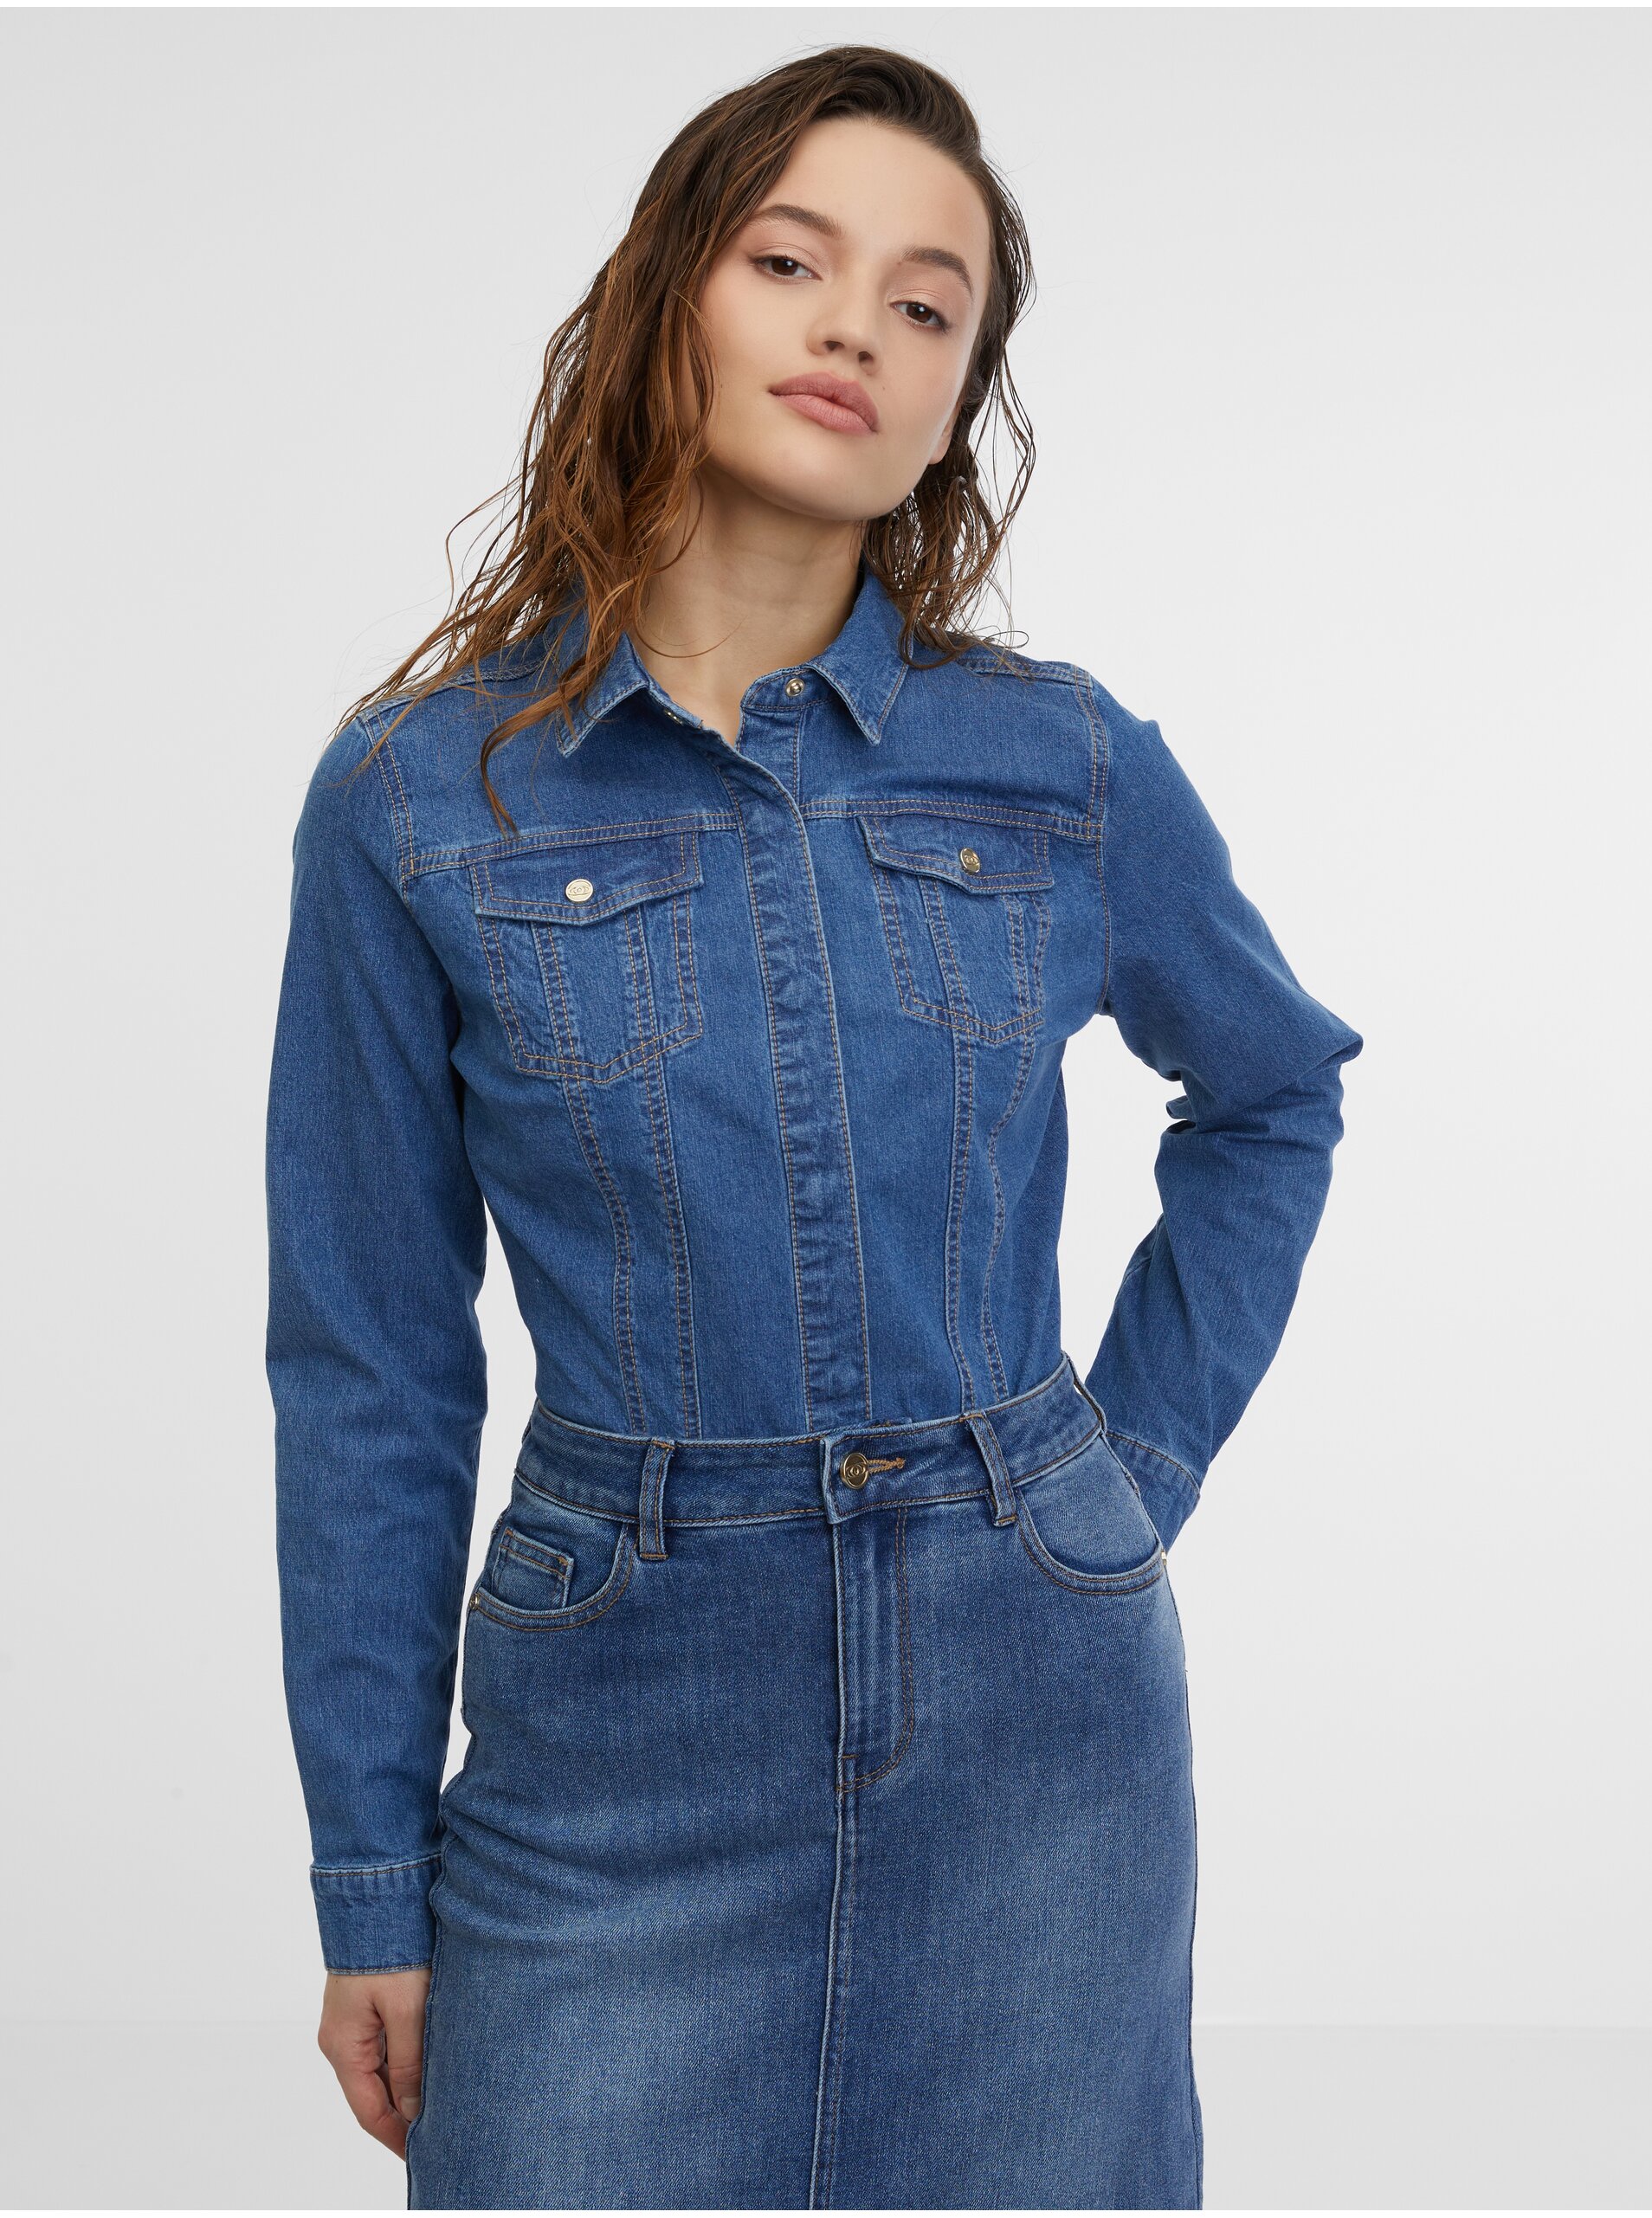 Lacno Modrá dámska džínsová košeľa ORSAY